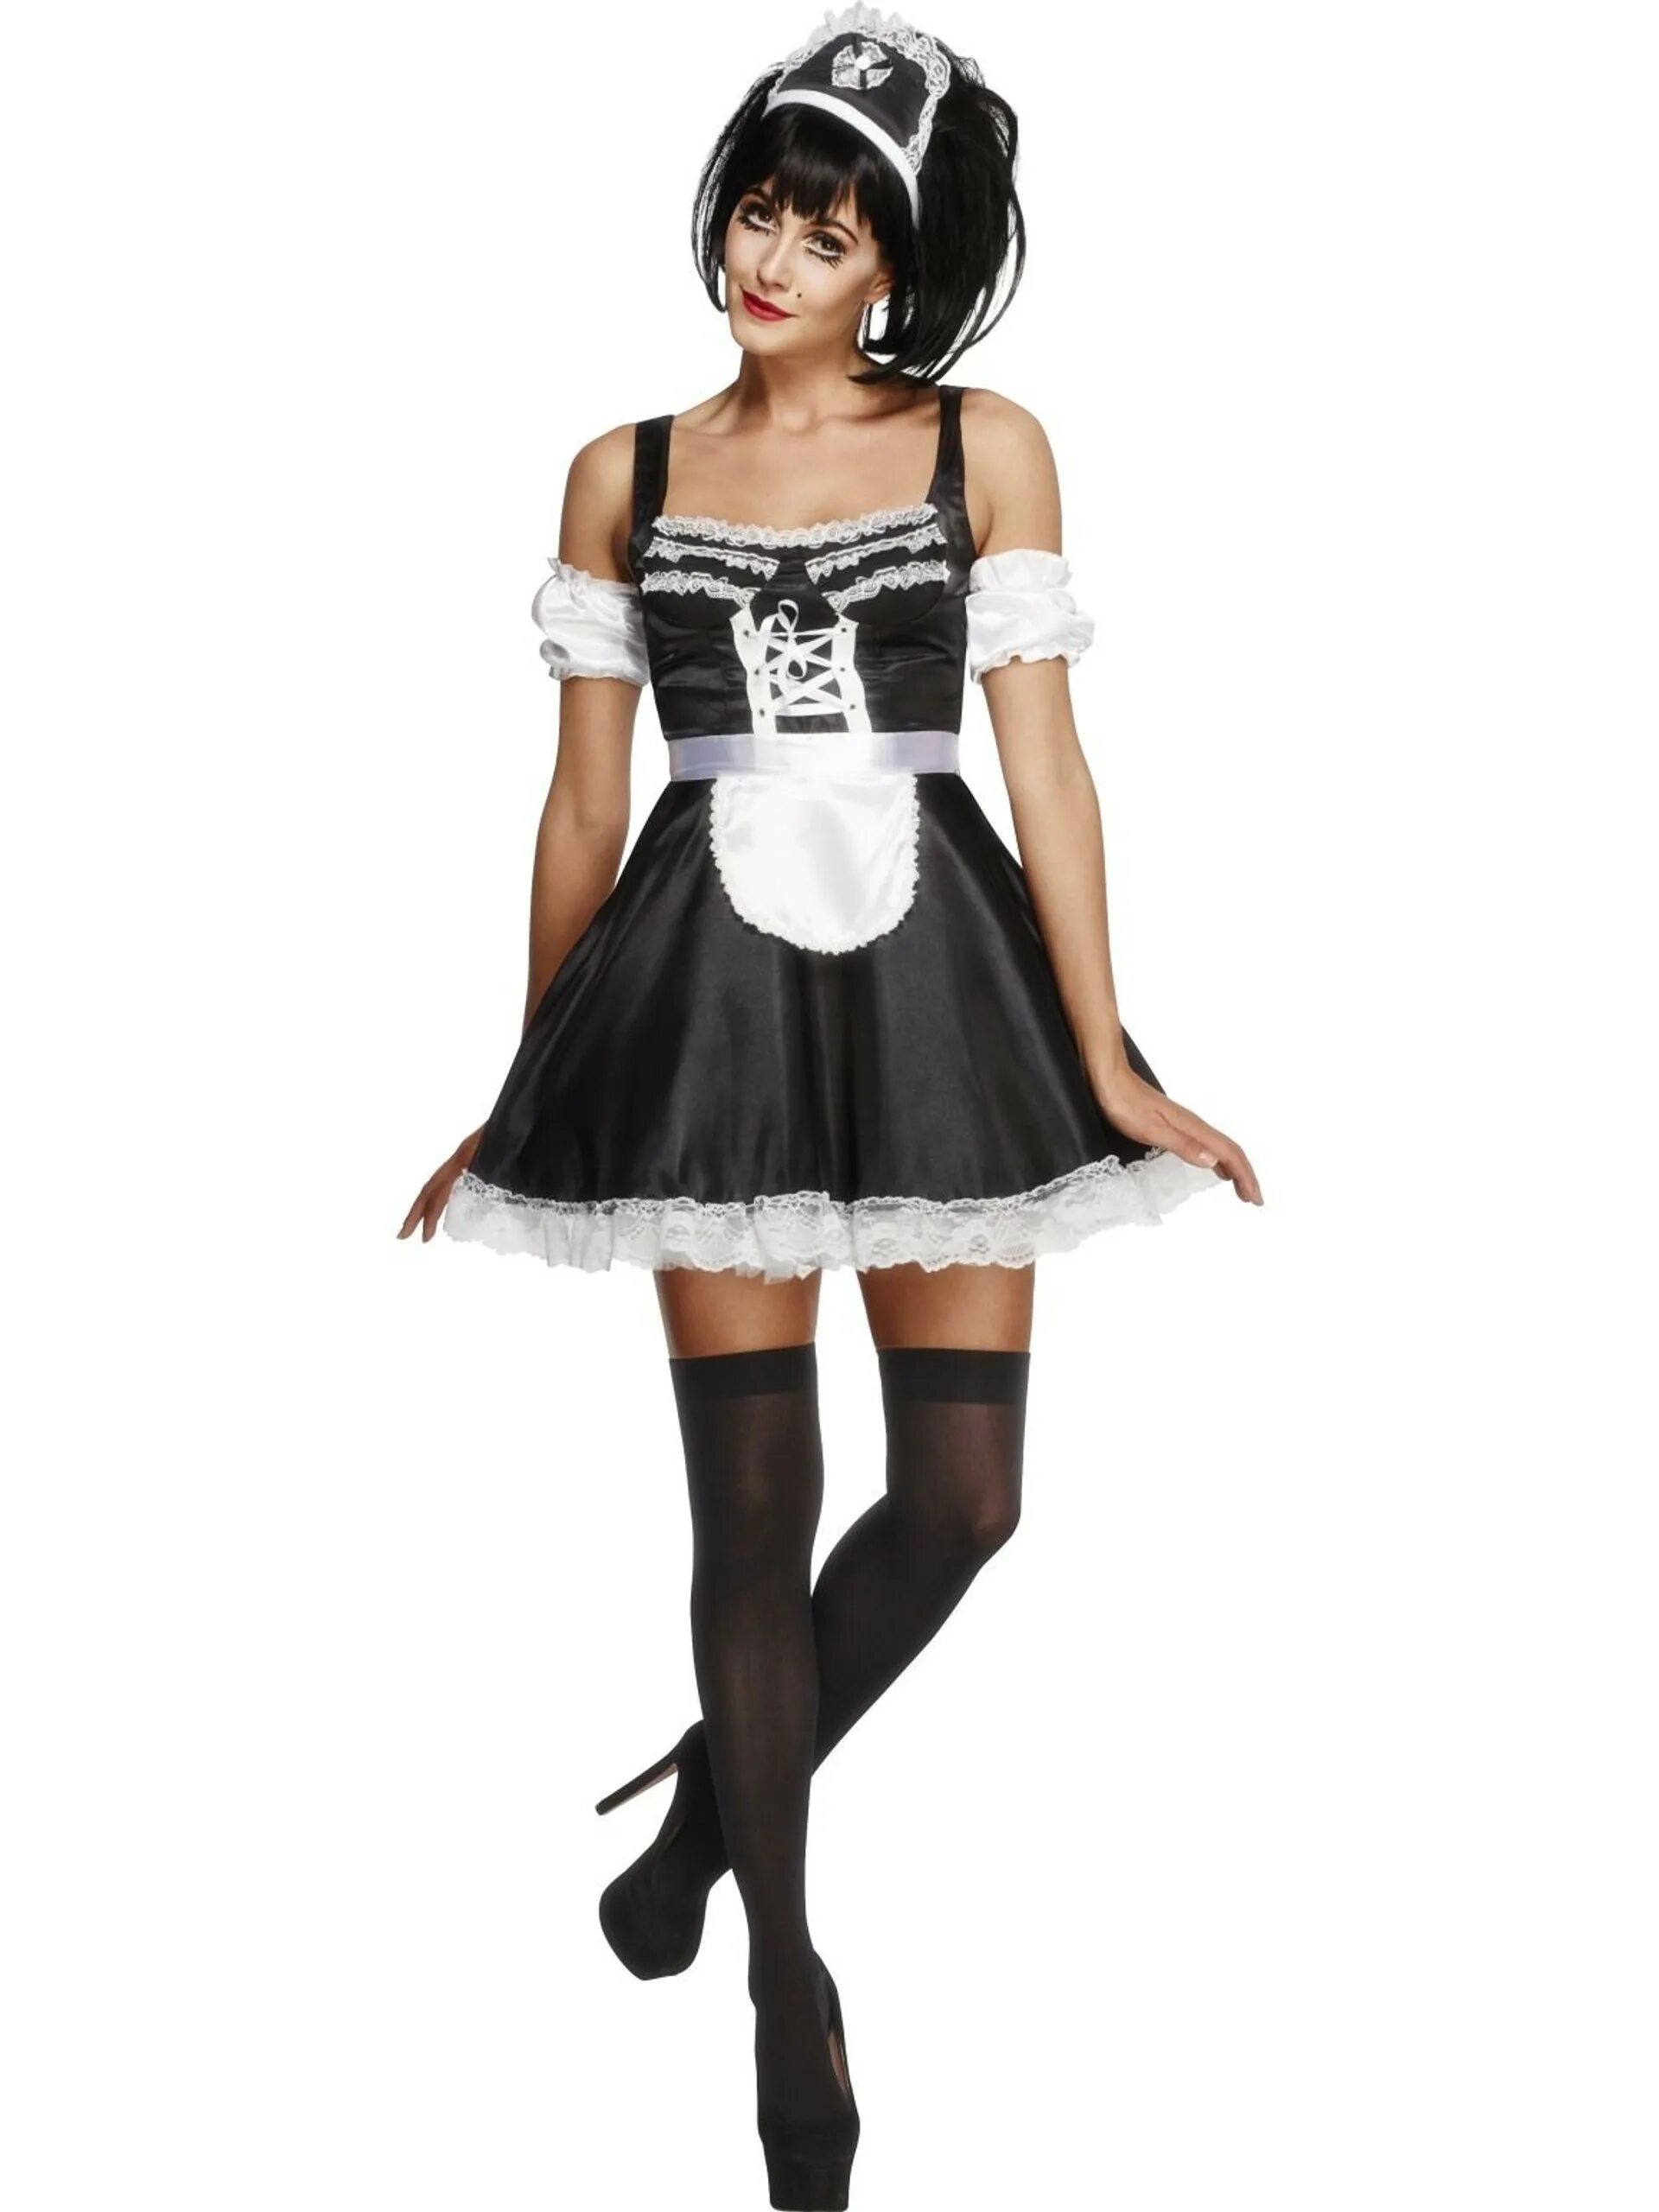 French maid. Костюм French Maid Costume. Костюм горничной flirty Maid. Наряд французской горничной. Костюм французский домработницы.